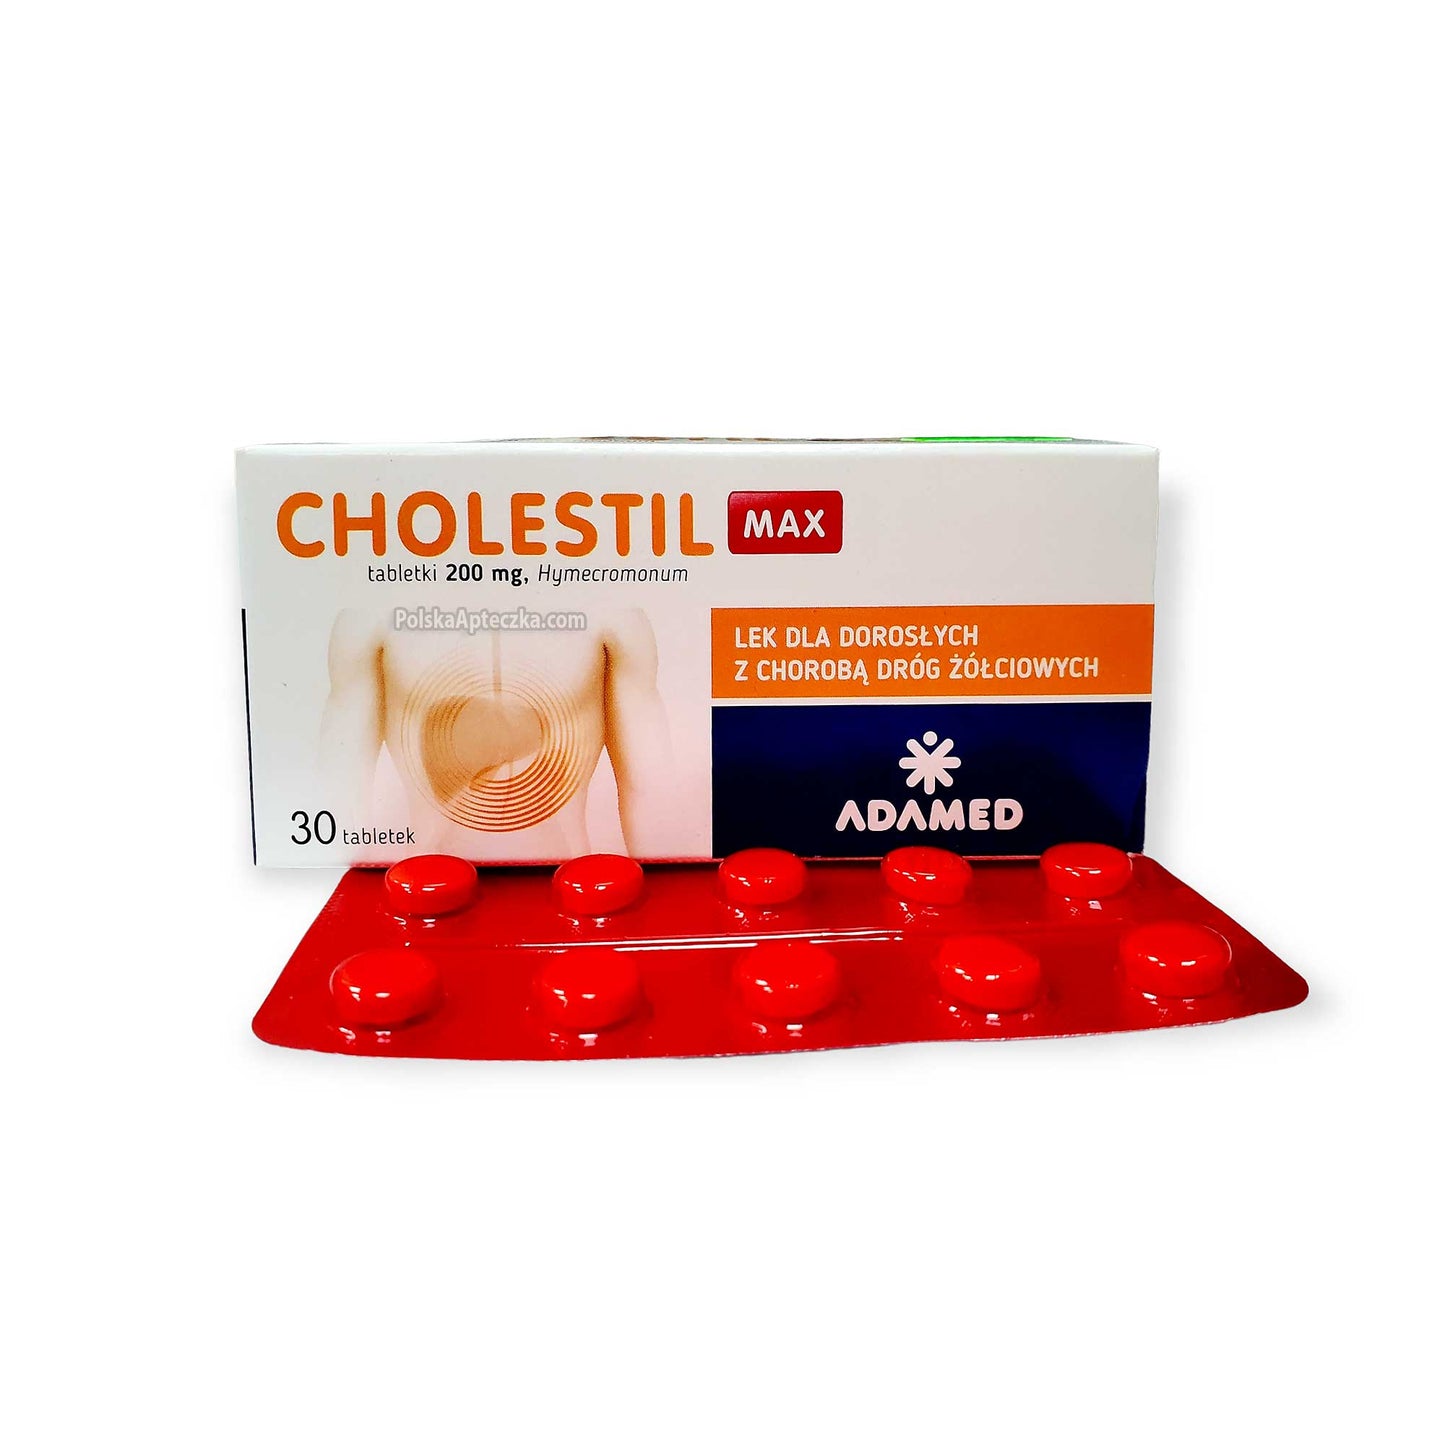 cholestil tablets